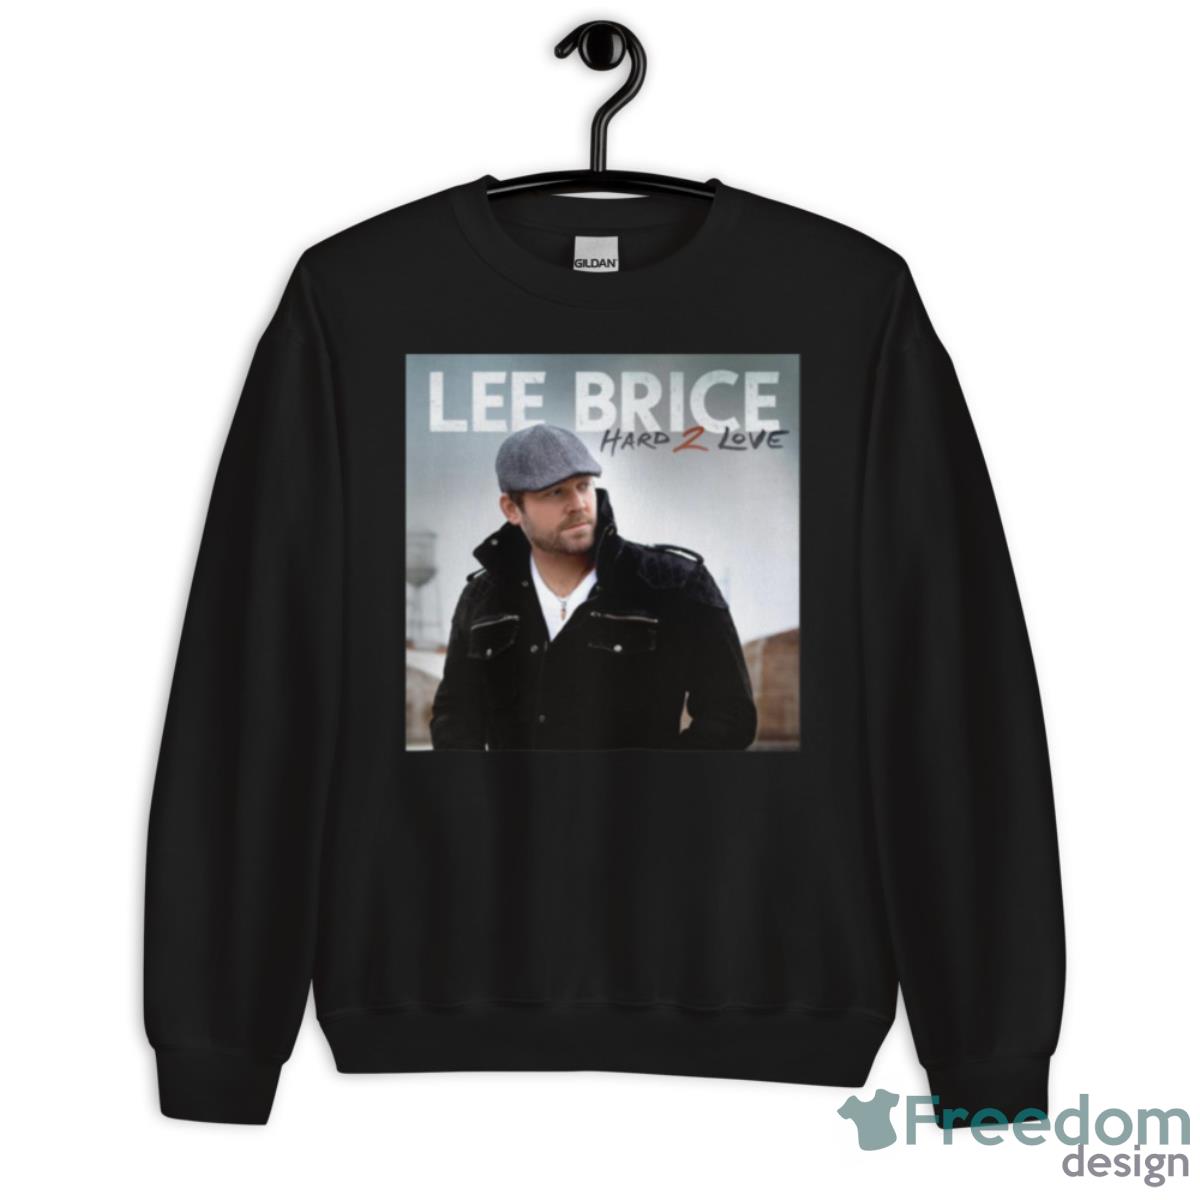 Lee Brice Hard 2 Love Shirt